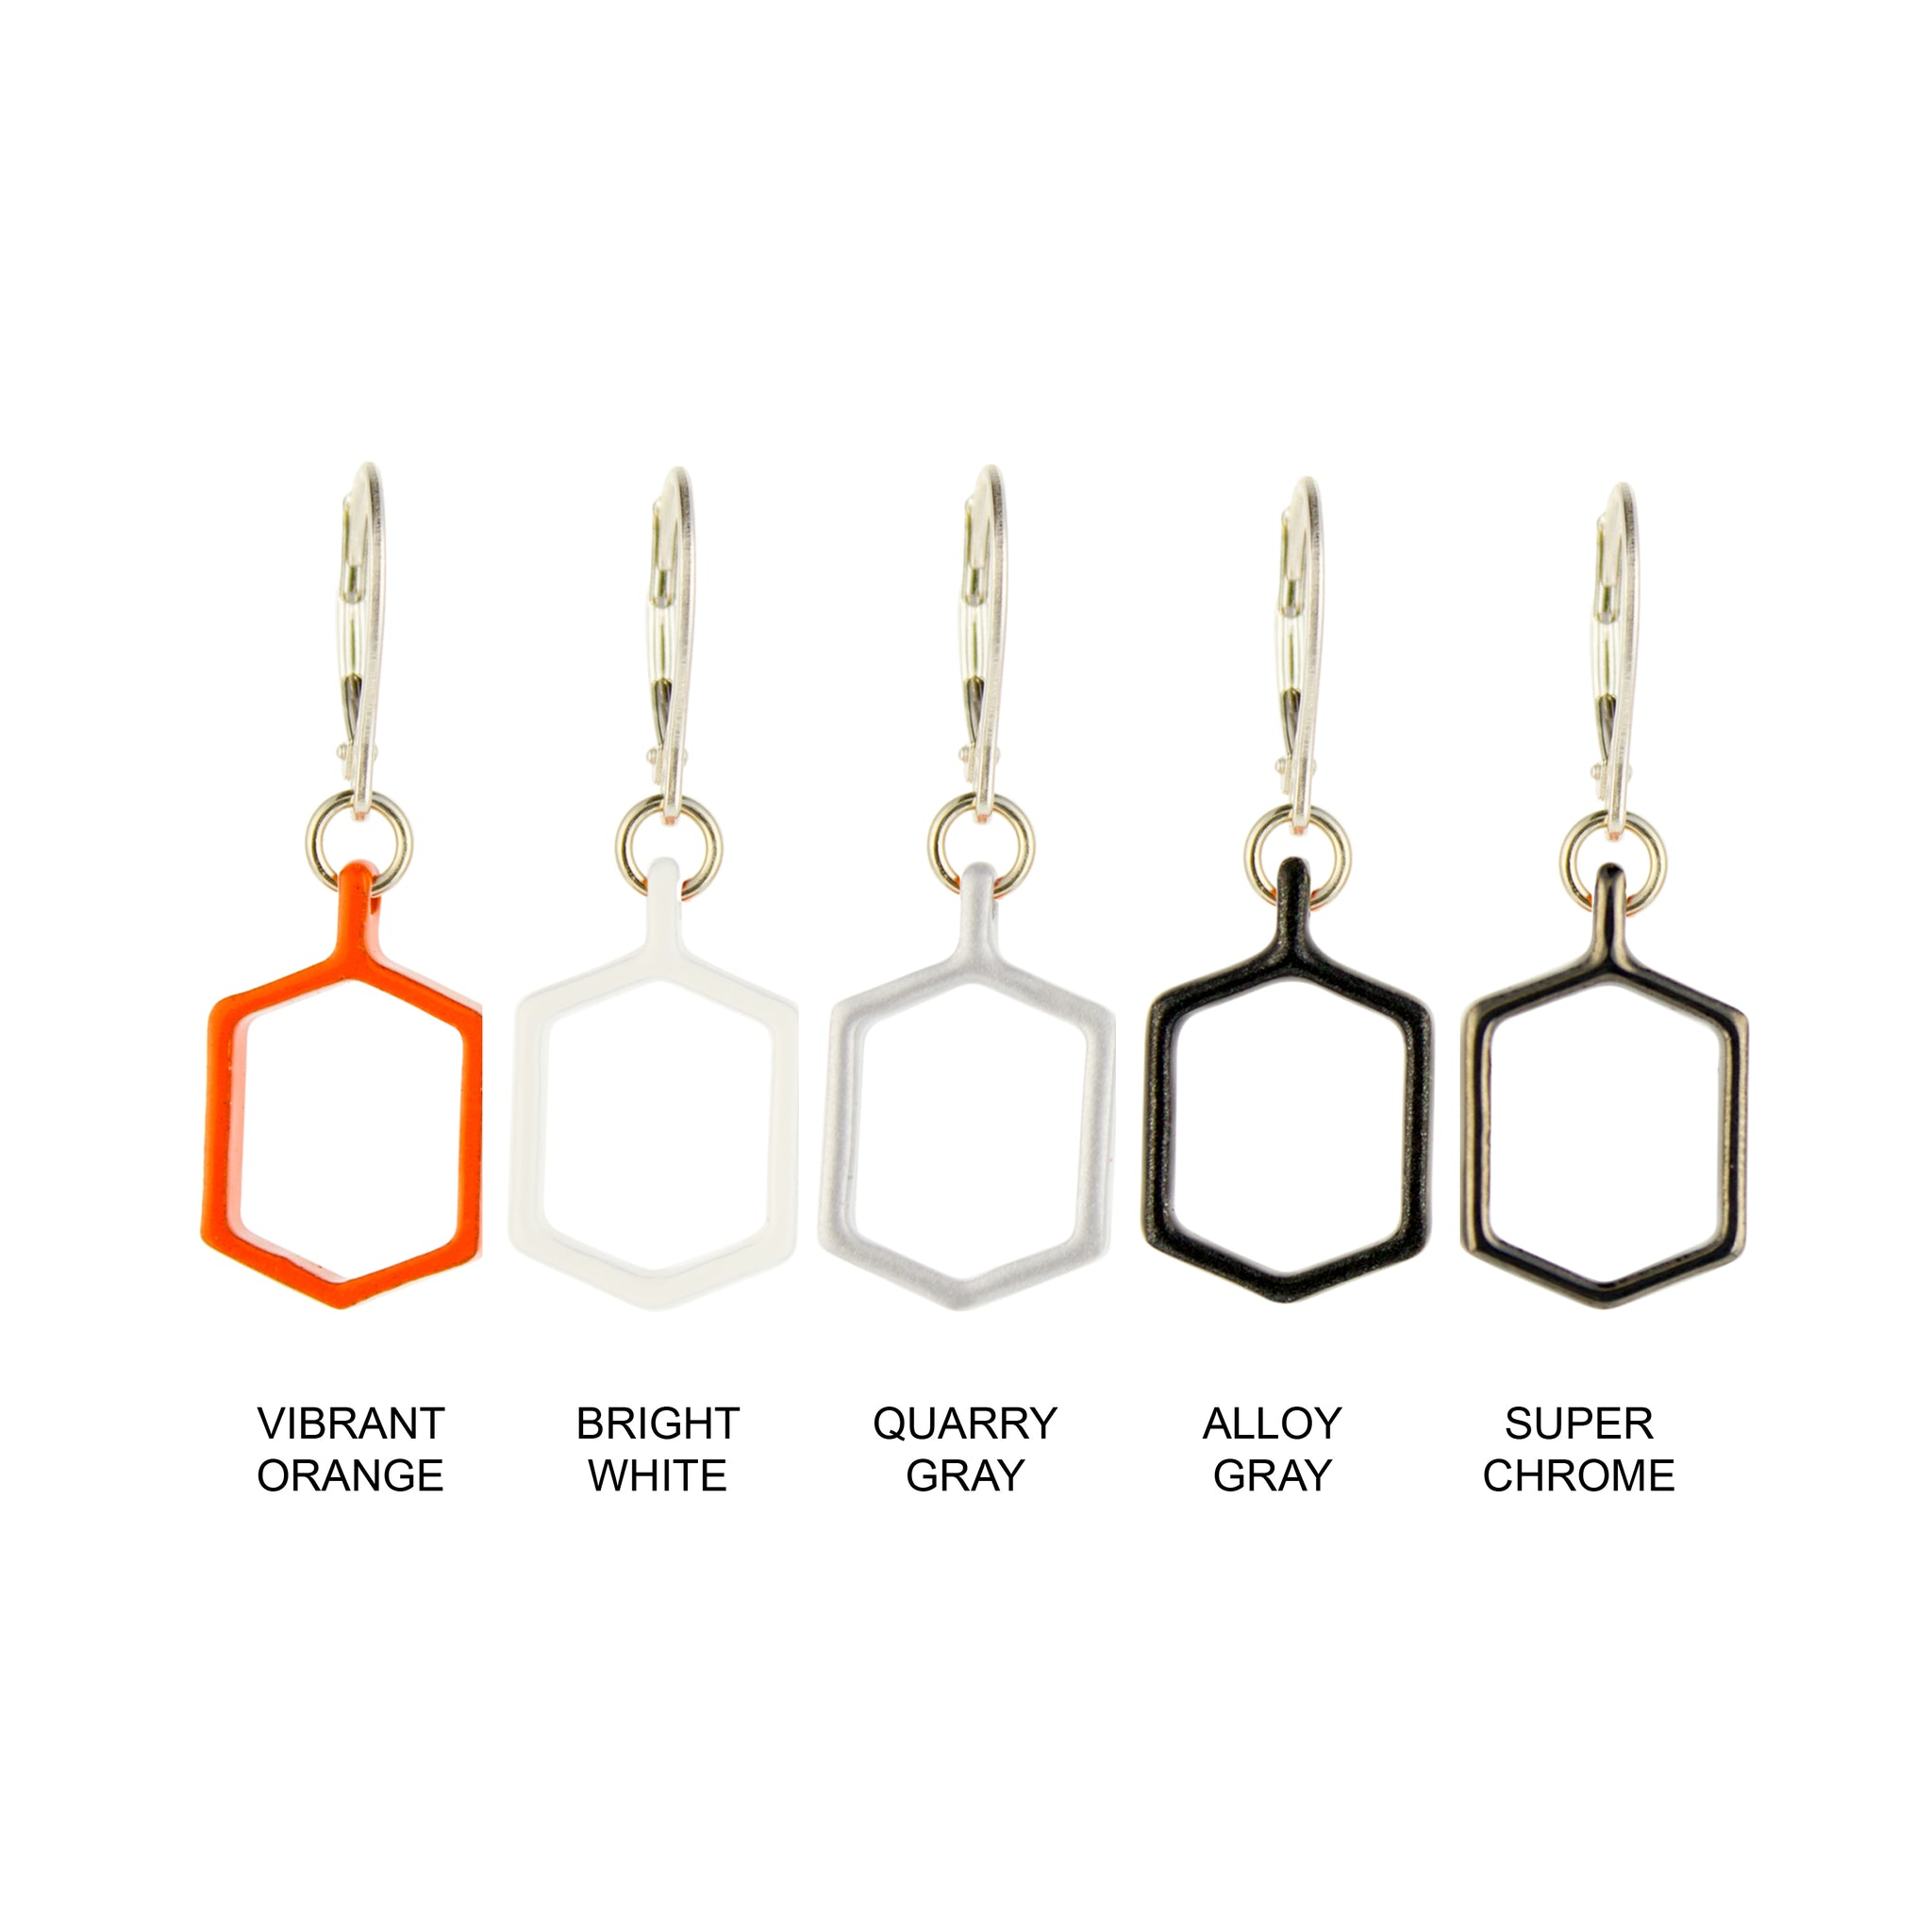 Vibrant_Orange - WITHIN x COMMON GROUND Earring Flat View Colorways